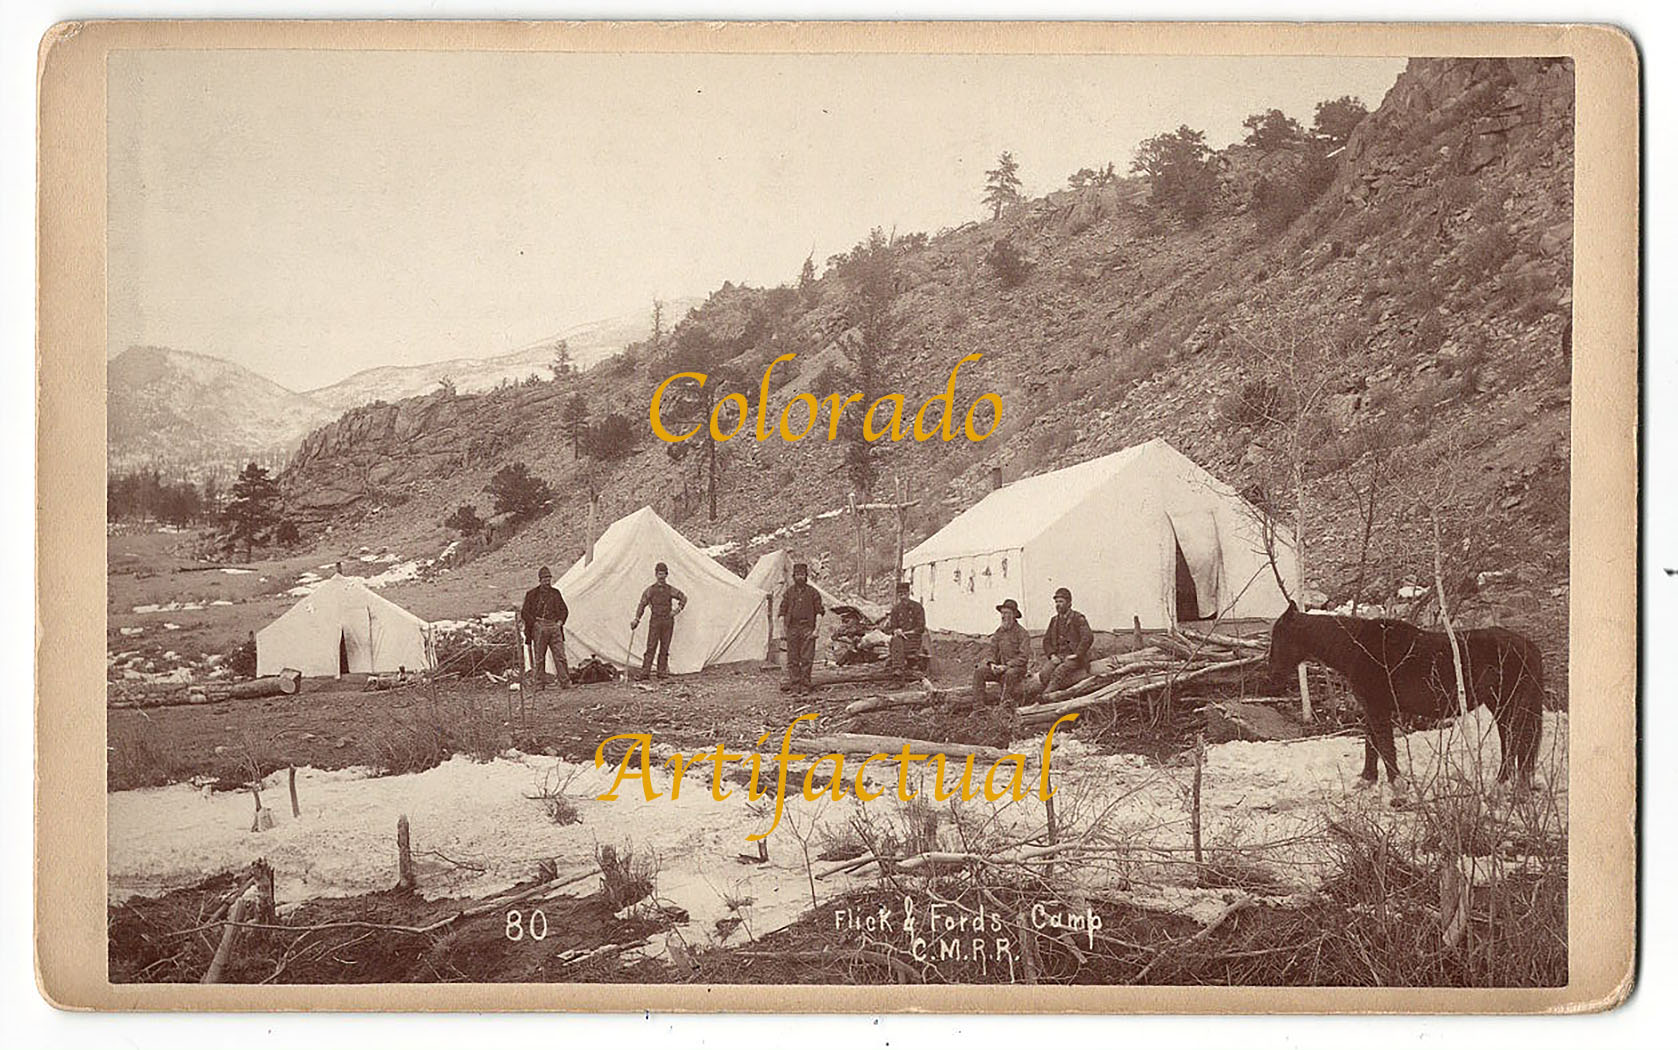 COLORADO MIDLAND RAILROAD, Flick & Ford’s construction camp, #80 C. W. Erdlen photograph, 1887